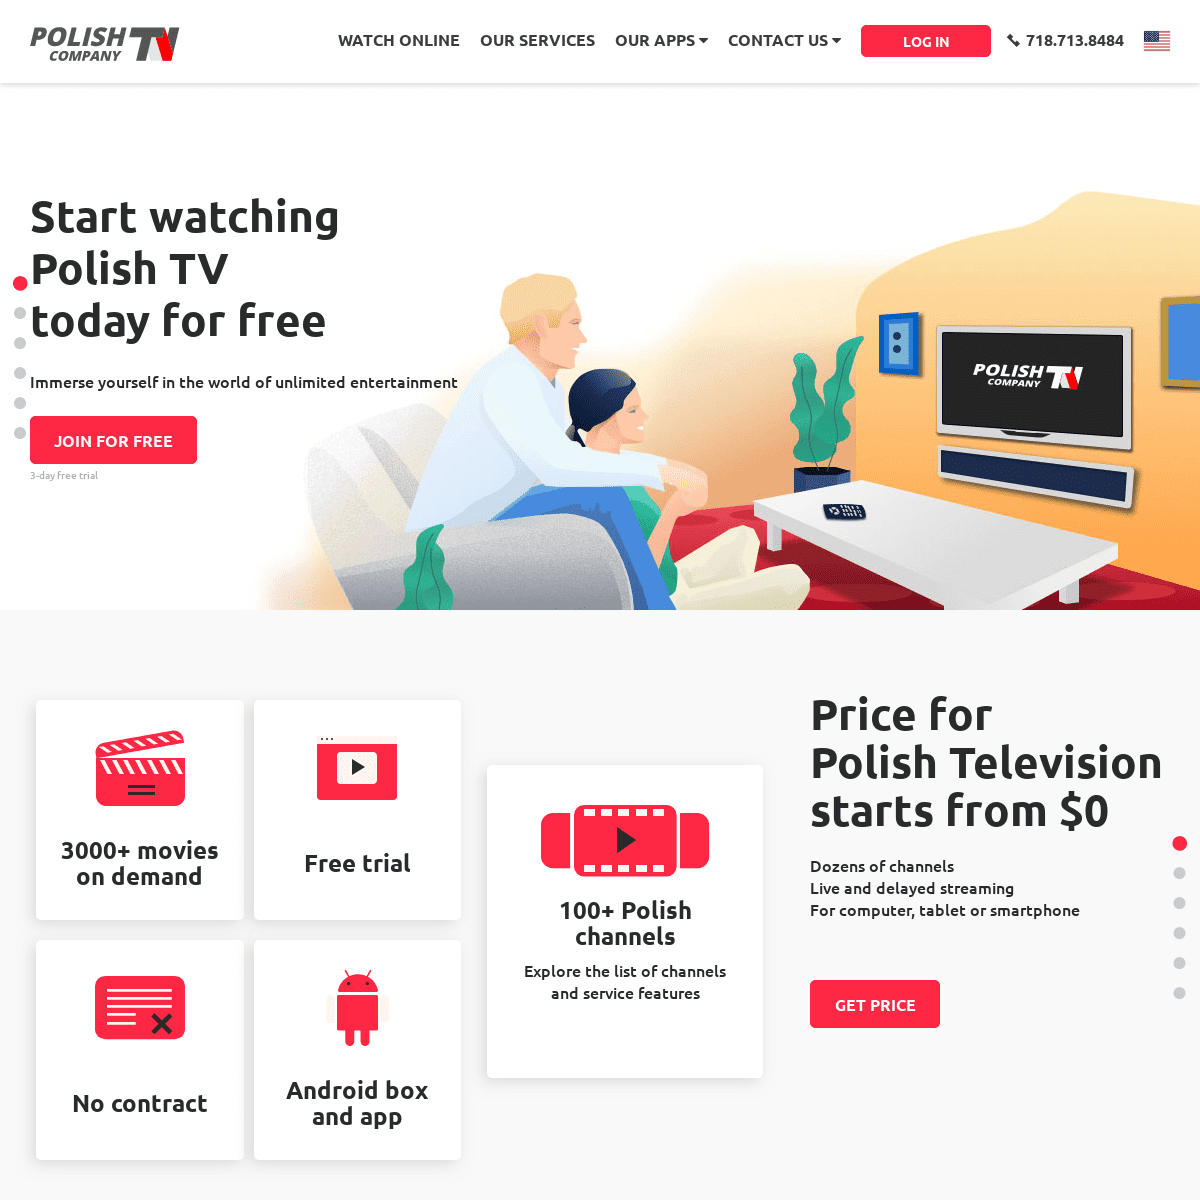 Polish TV Online - Polish TV Company